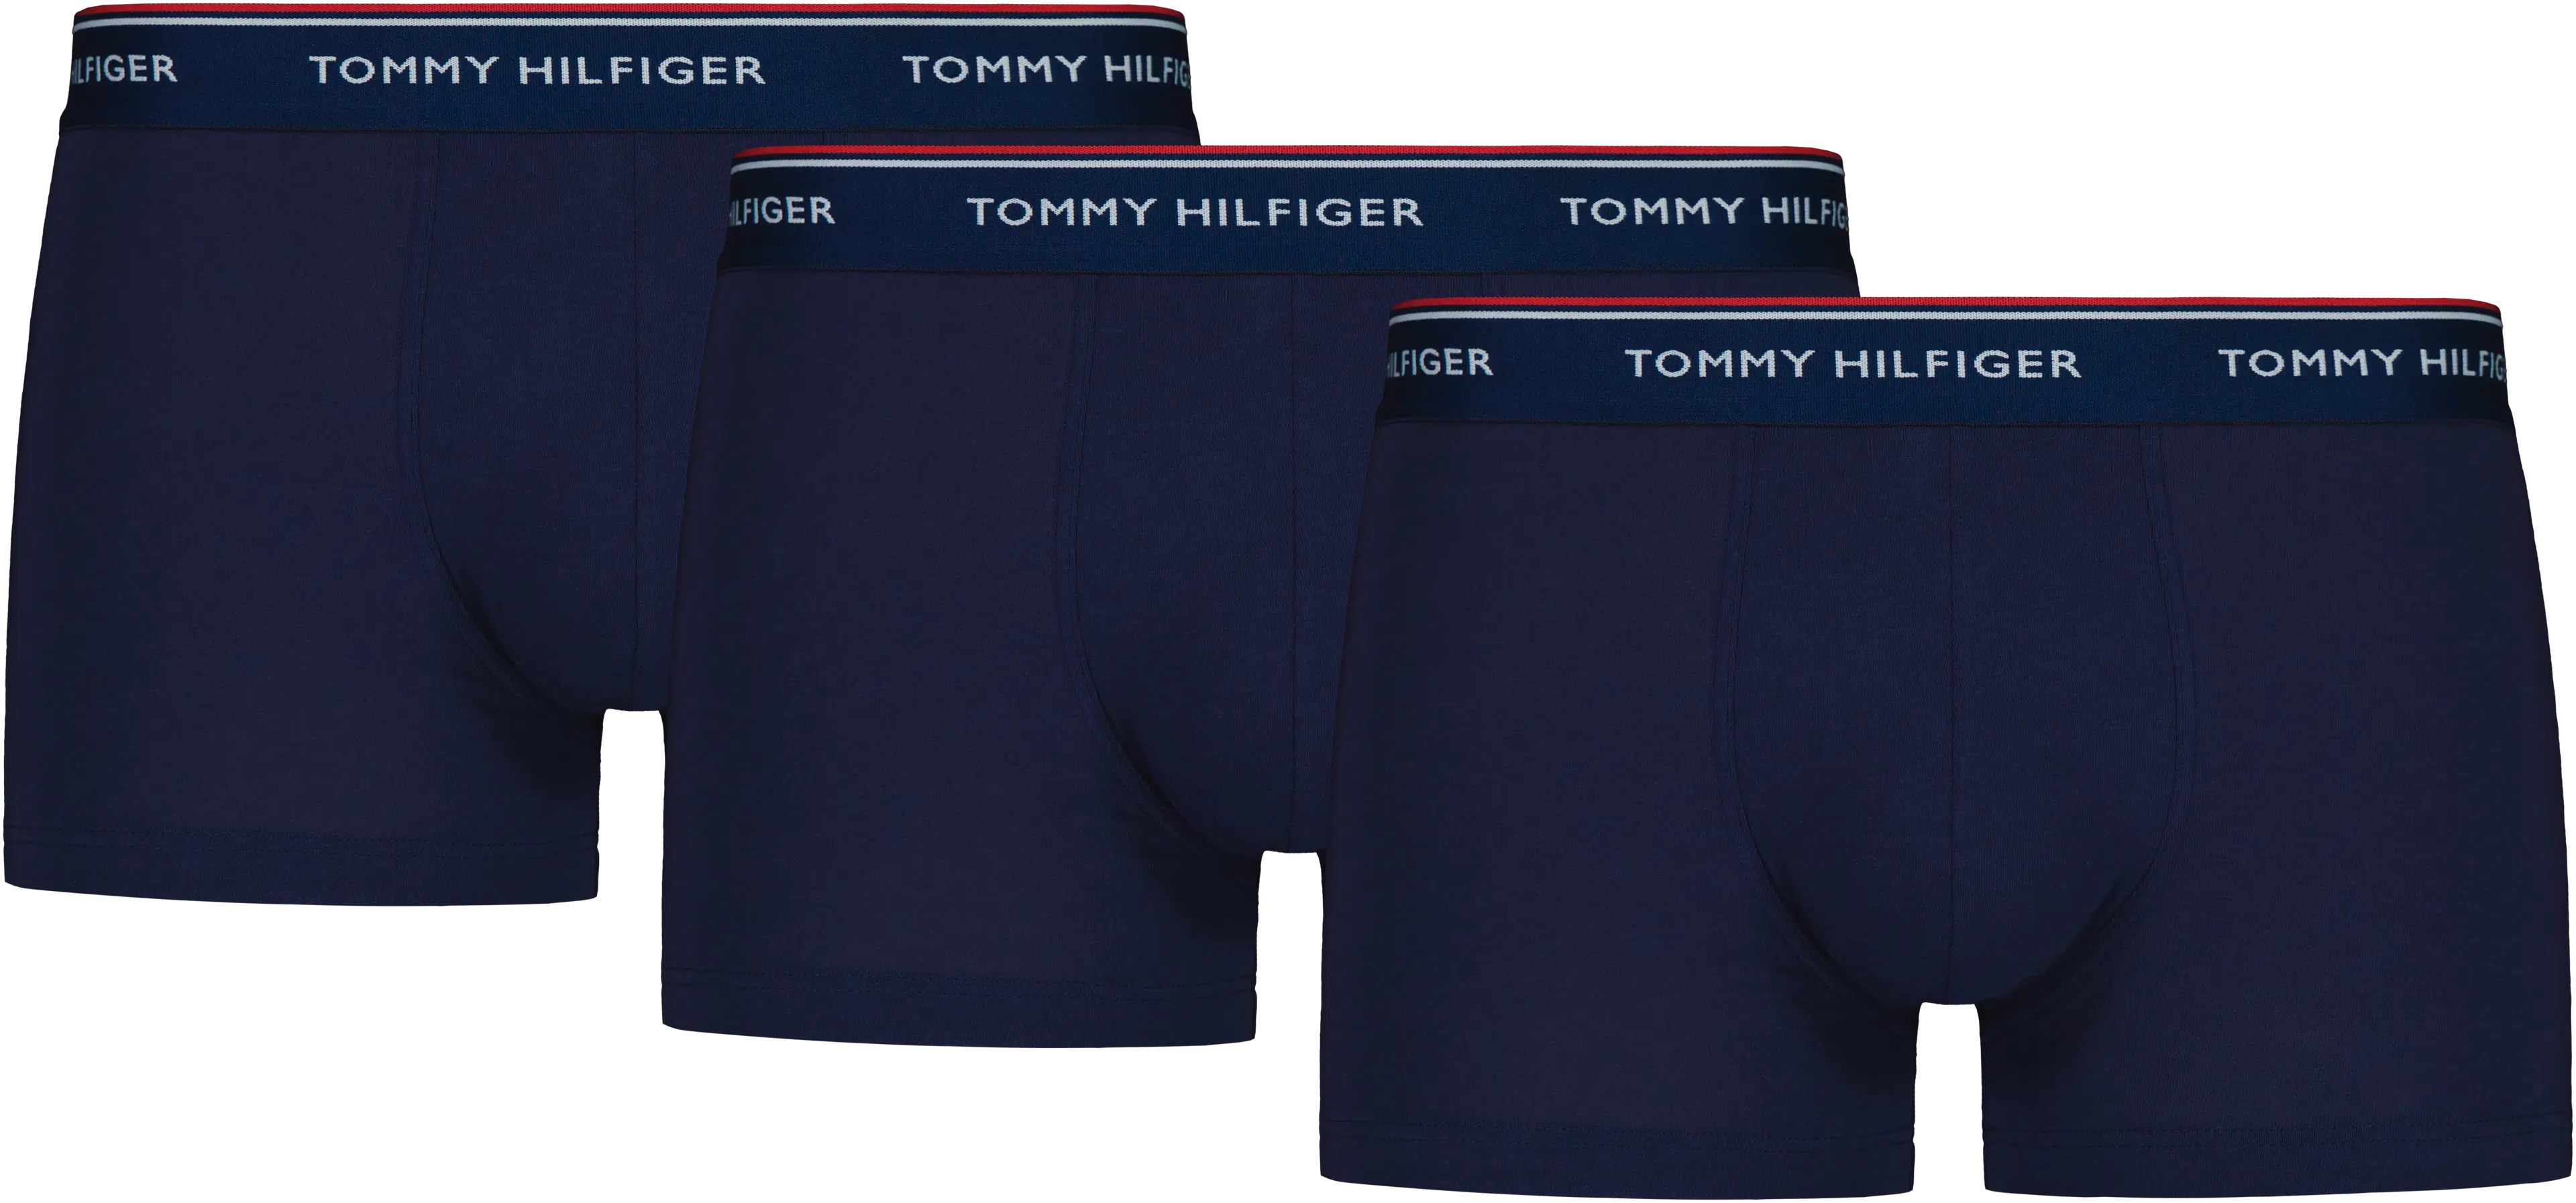 Tommy Hilfiger Premium Essential 3-pack trunk alushousut